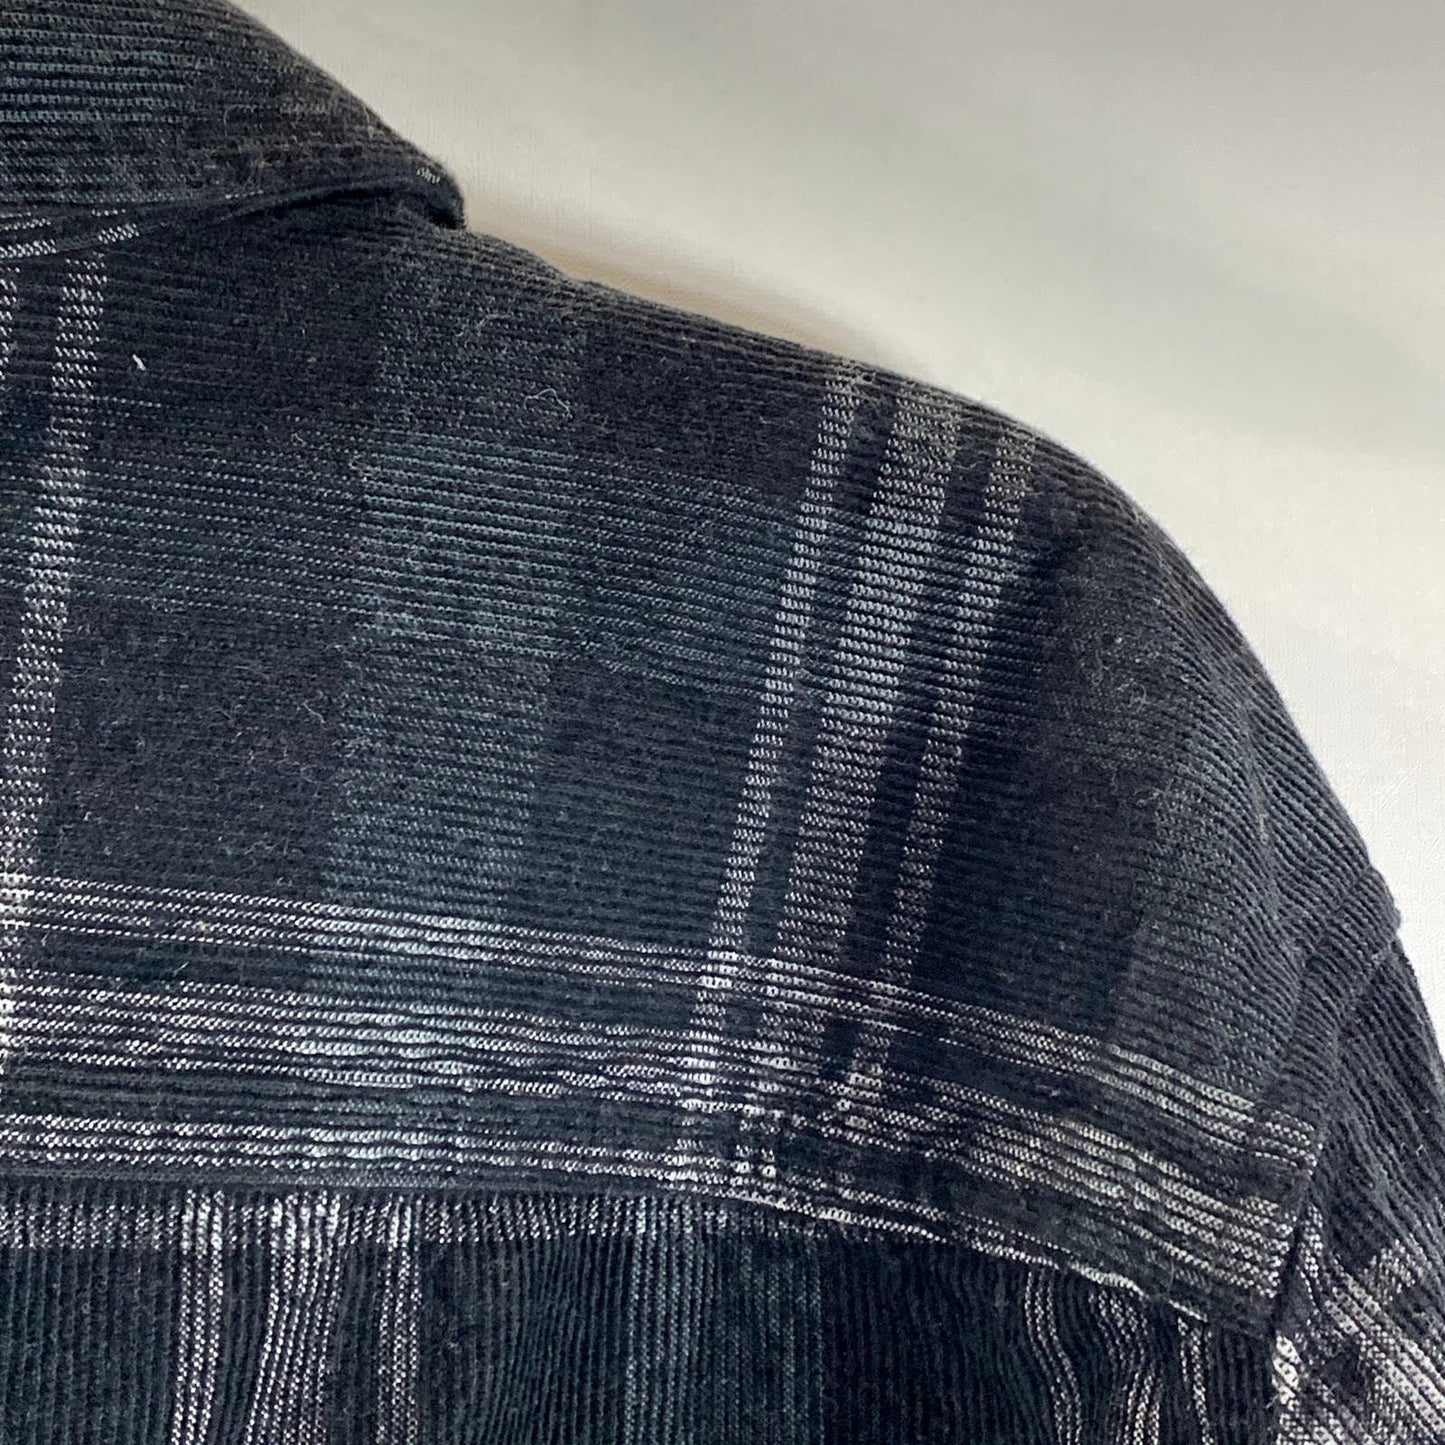 MADEWELL Men's Black Plaid Corduroy Button-Up Long Sleeve Shirt SZ M